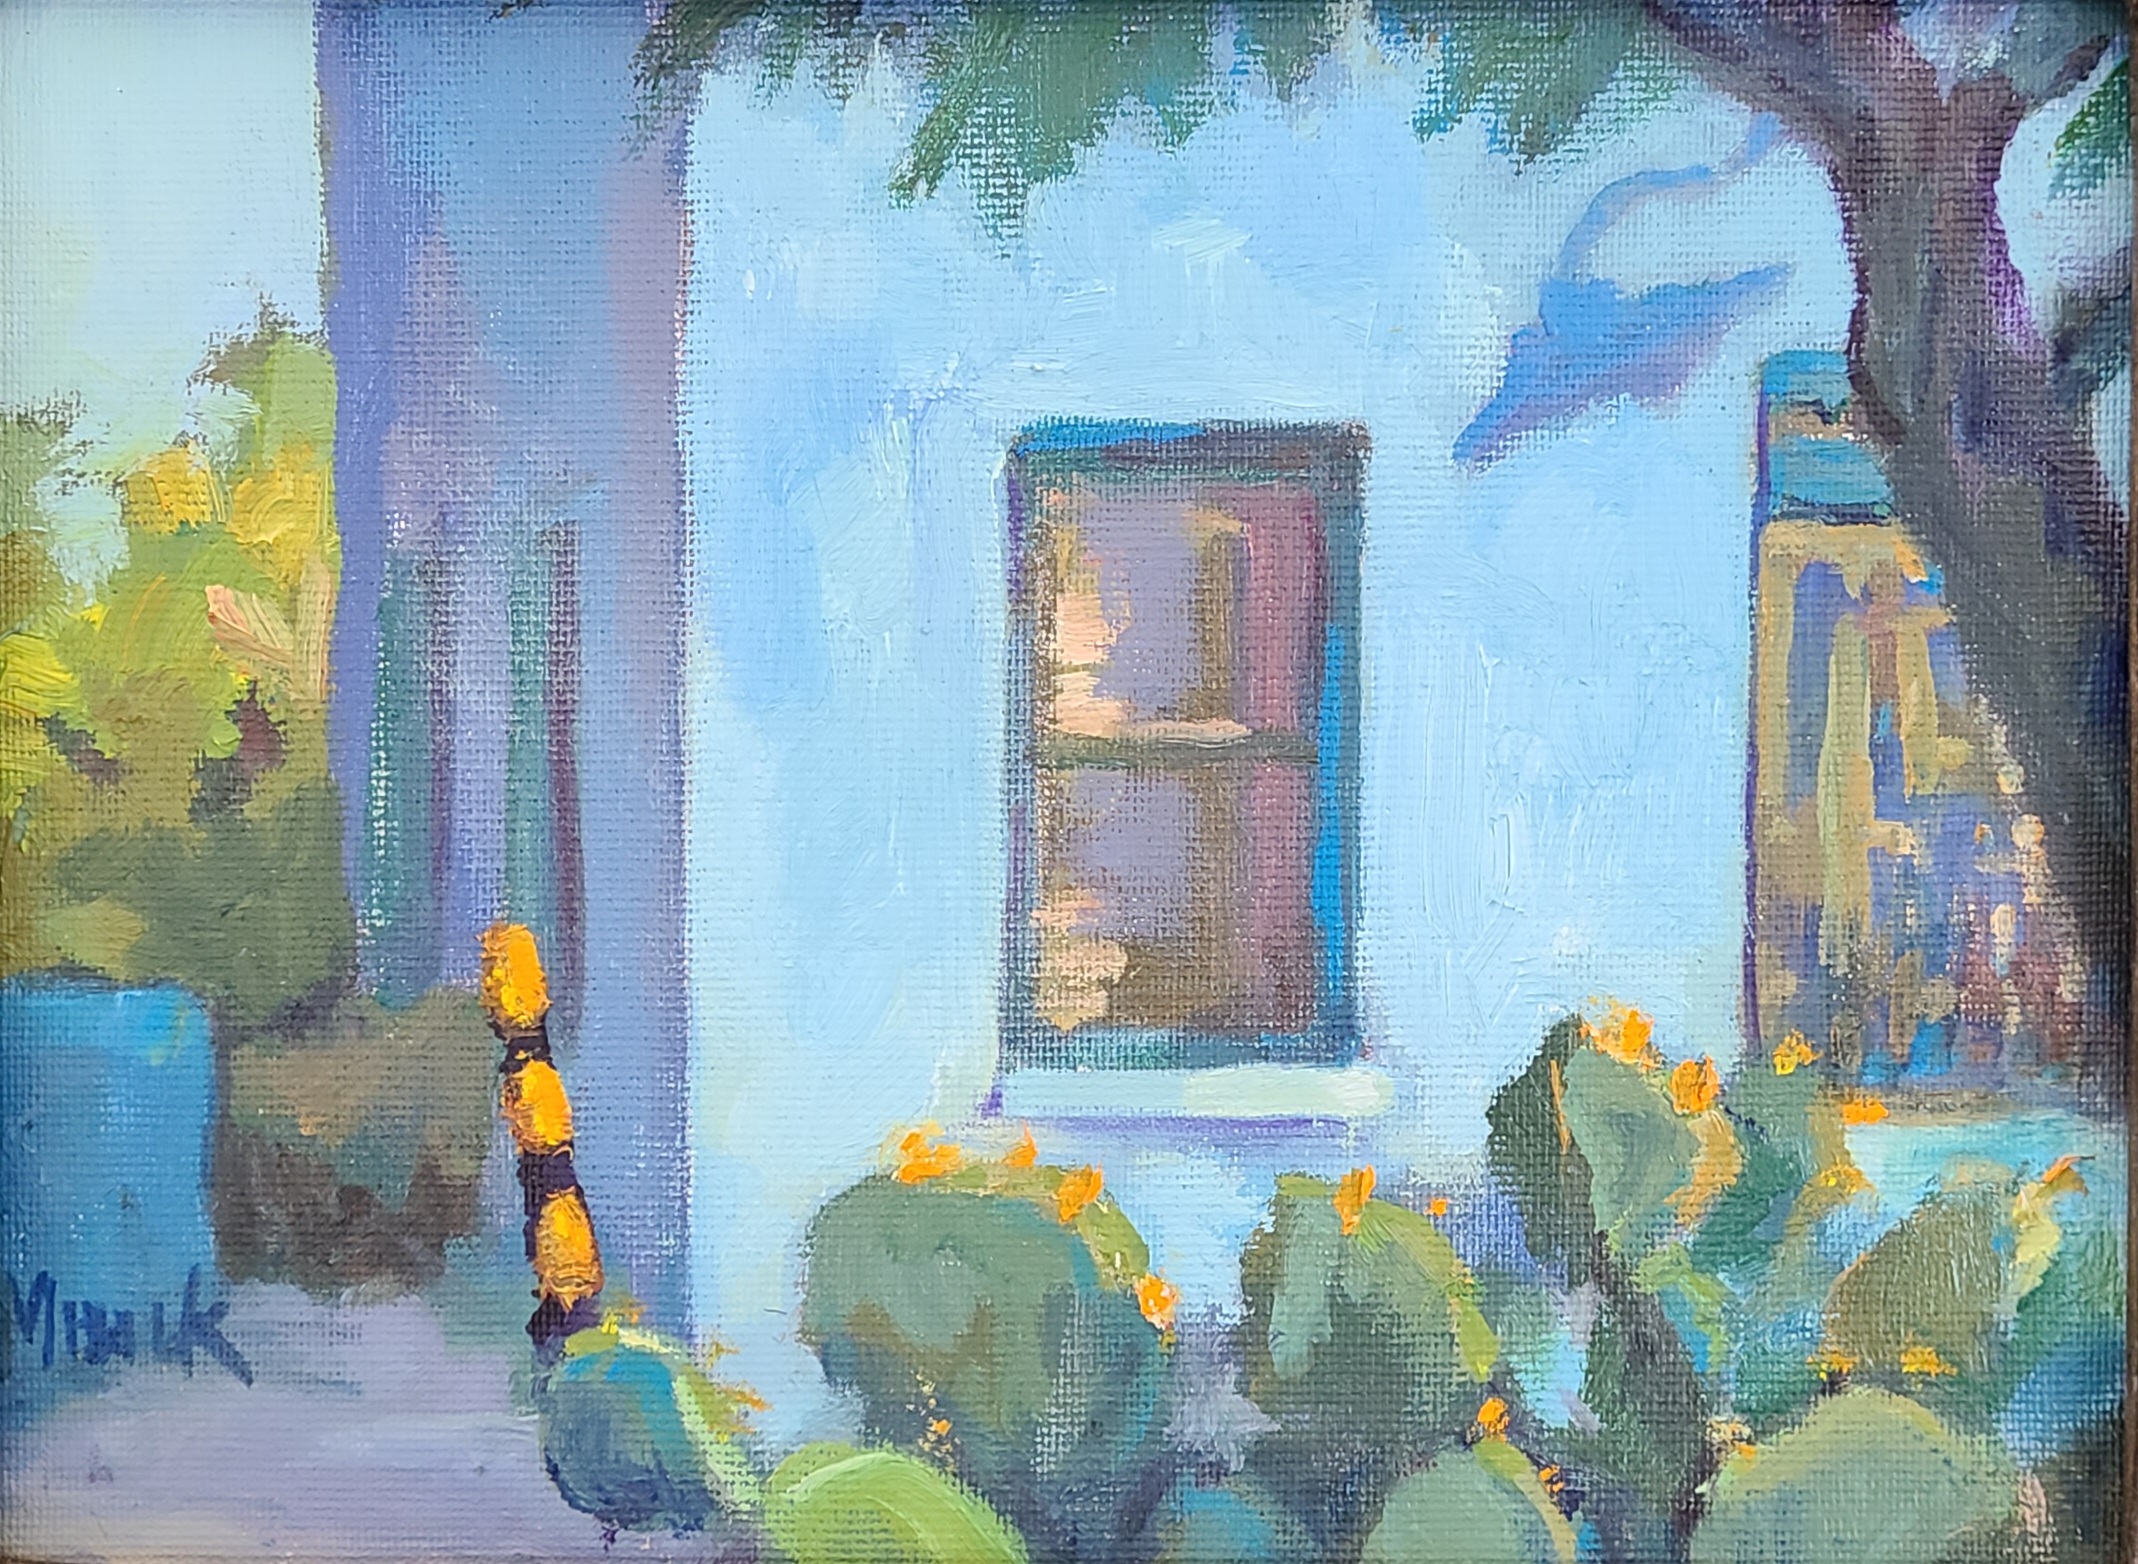 Kathy Minck's "Blue House"